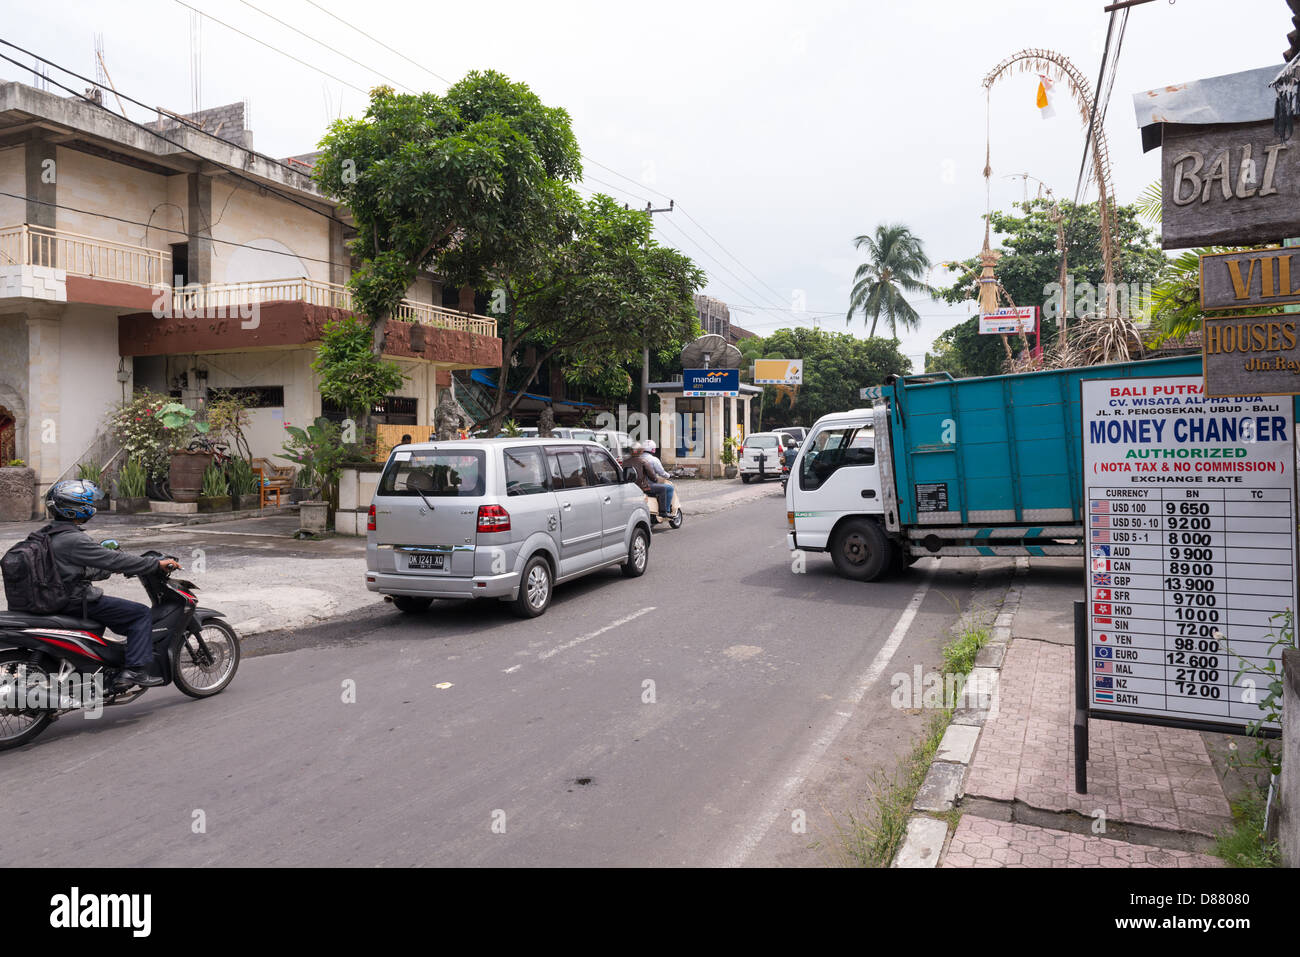 Street scene in Ubud near busy road Stock Photo